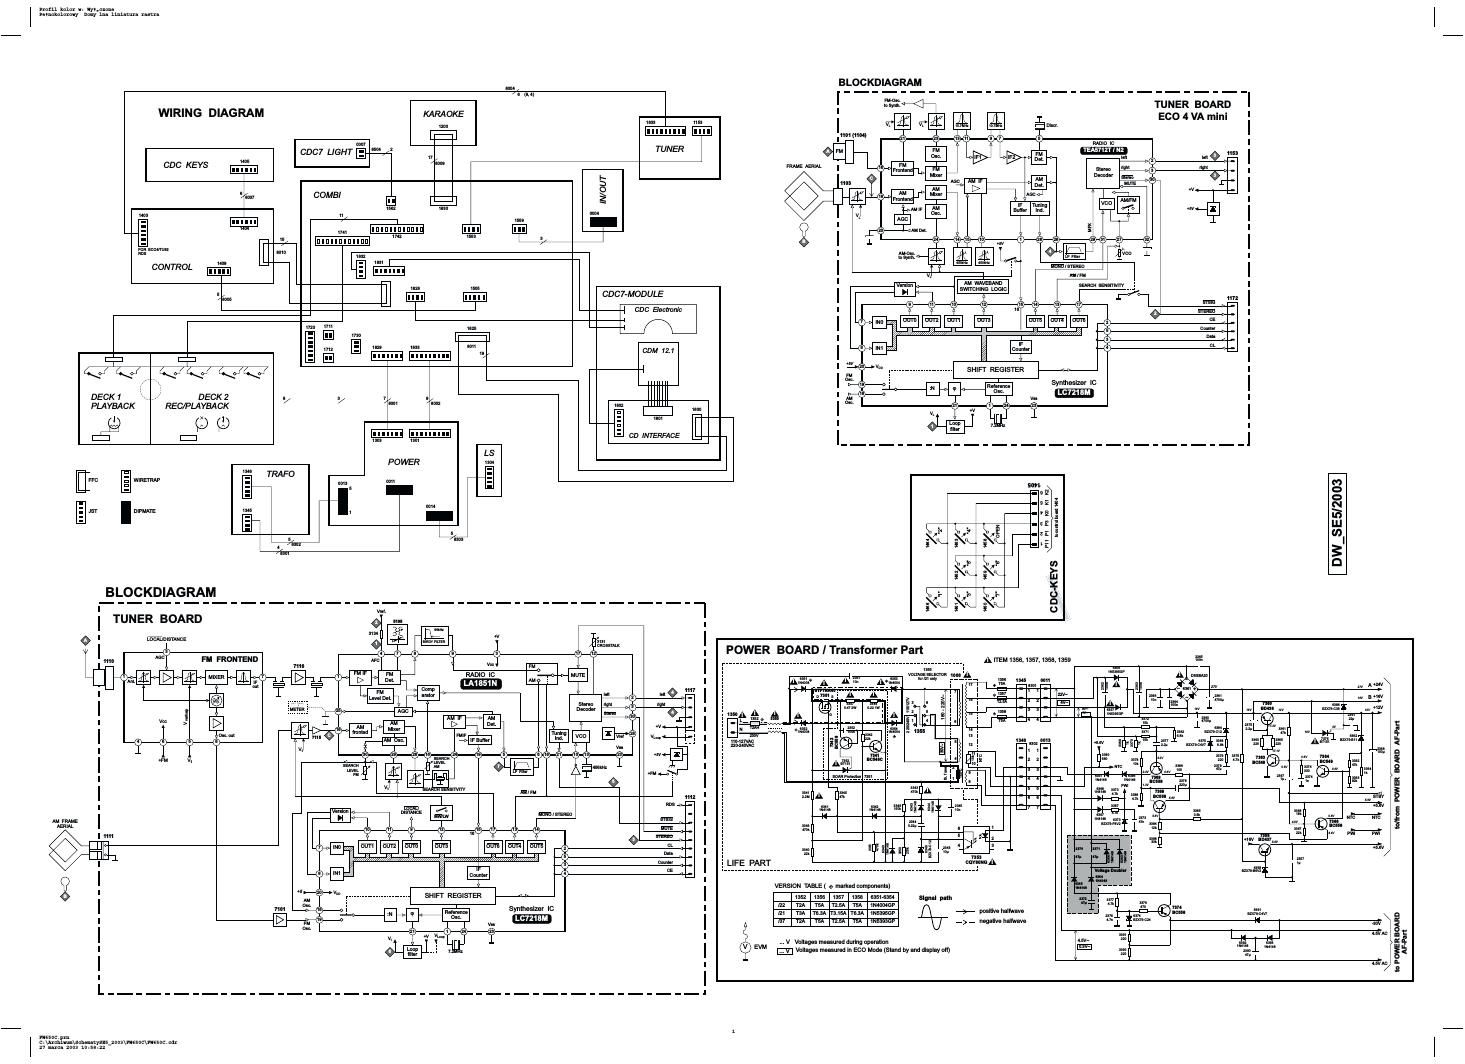 philips fw 650 c schematic